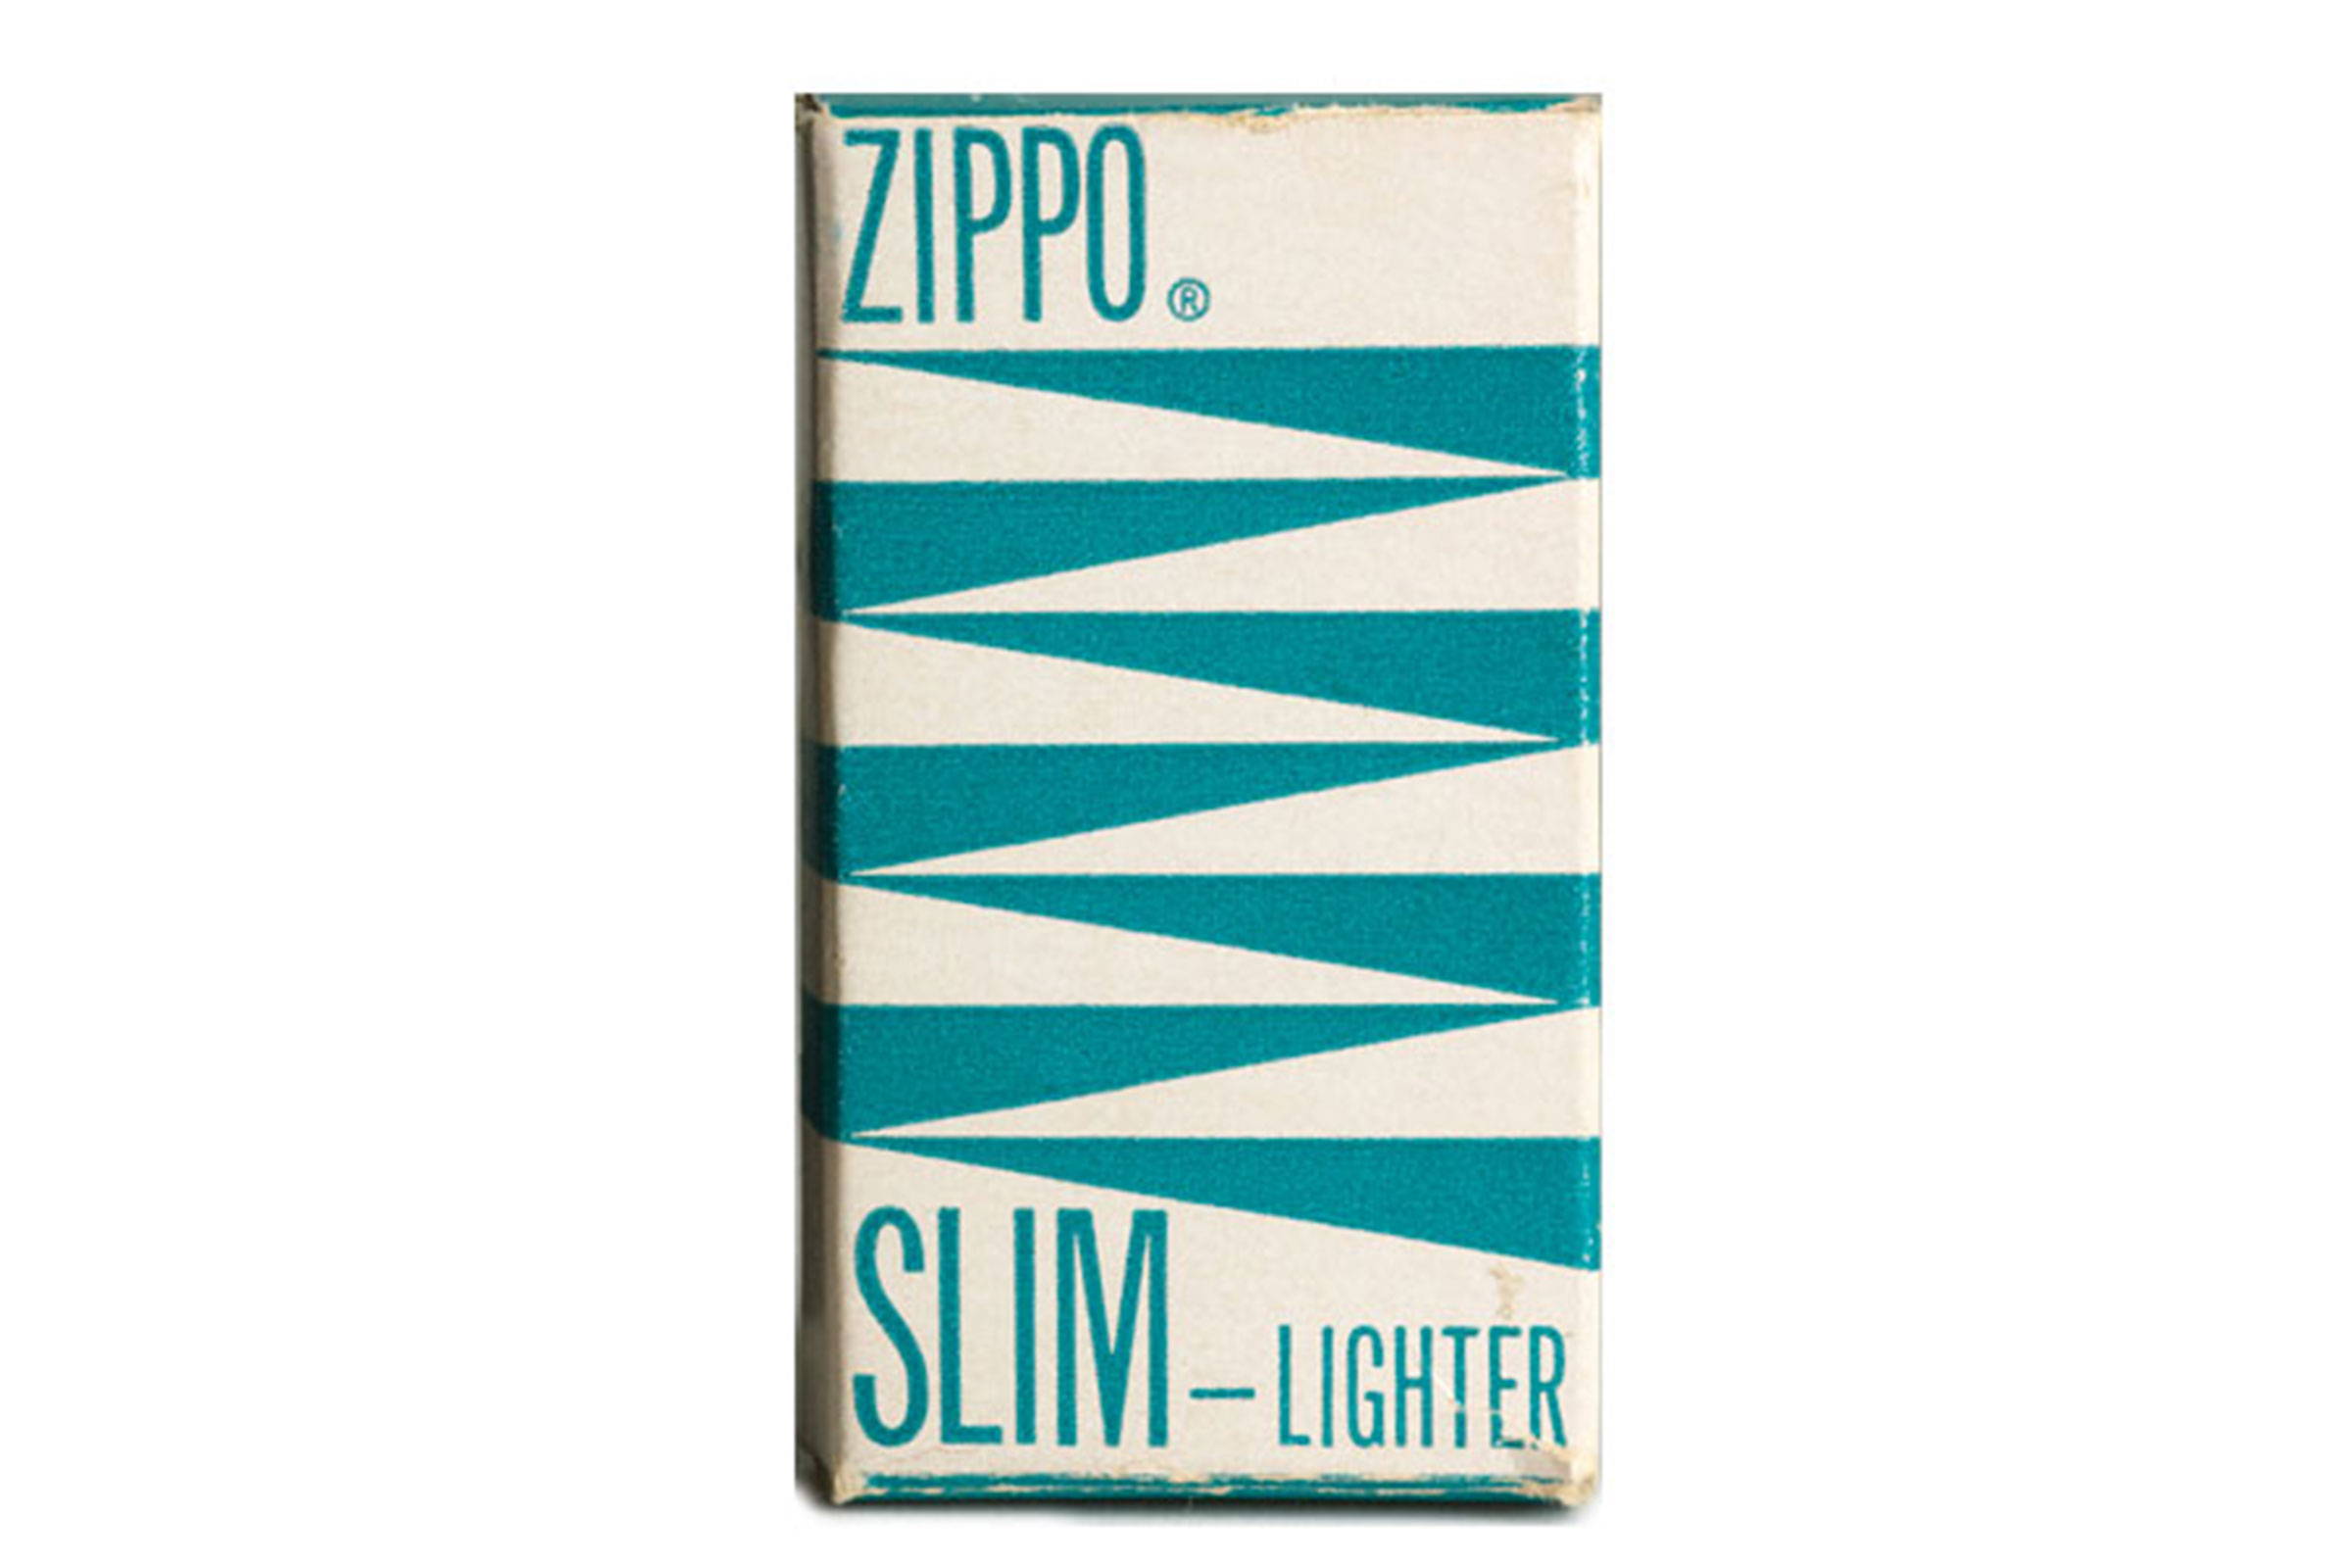 Zippo Slim Lighter - Original Packaging